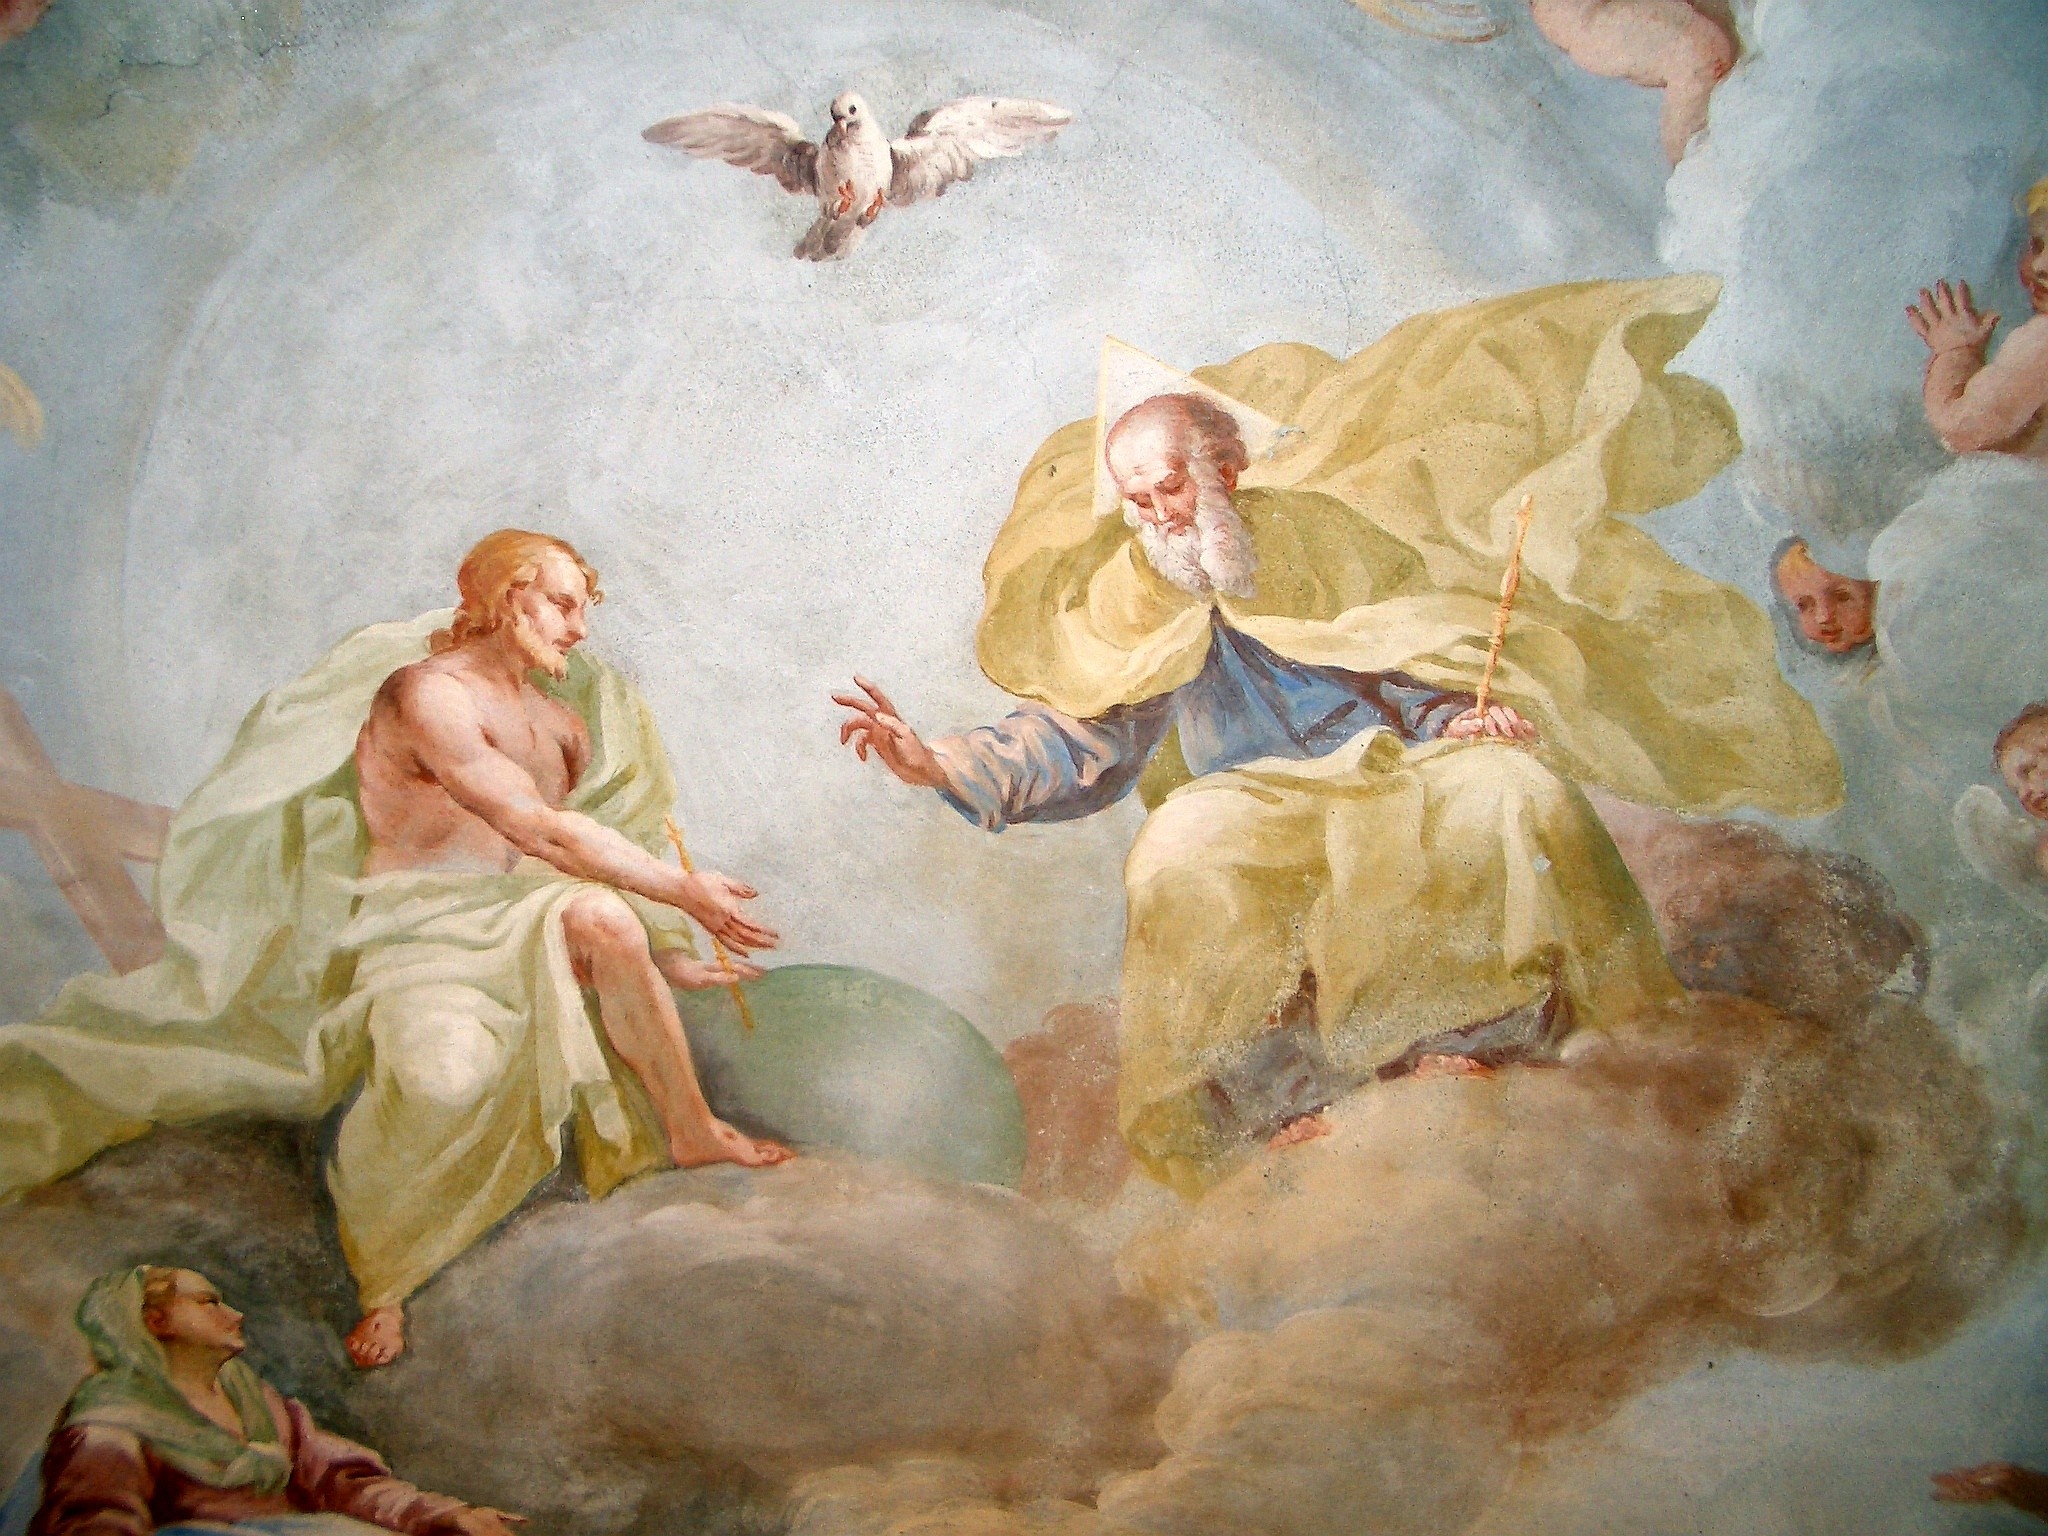 2048x1536 “The Holy Trinity' by Luca Rossetti da Orta, fresco, 1738-1739. “